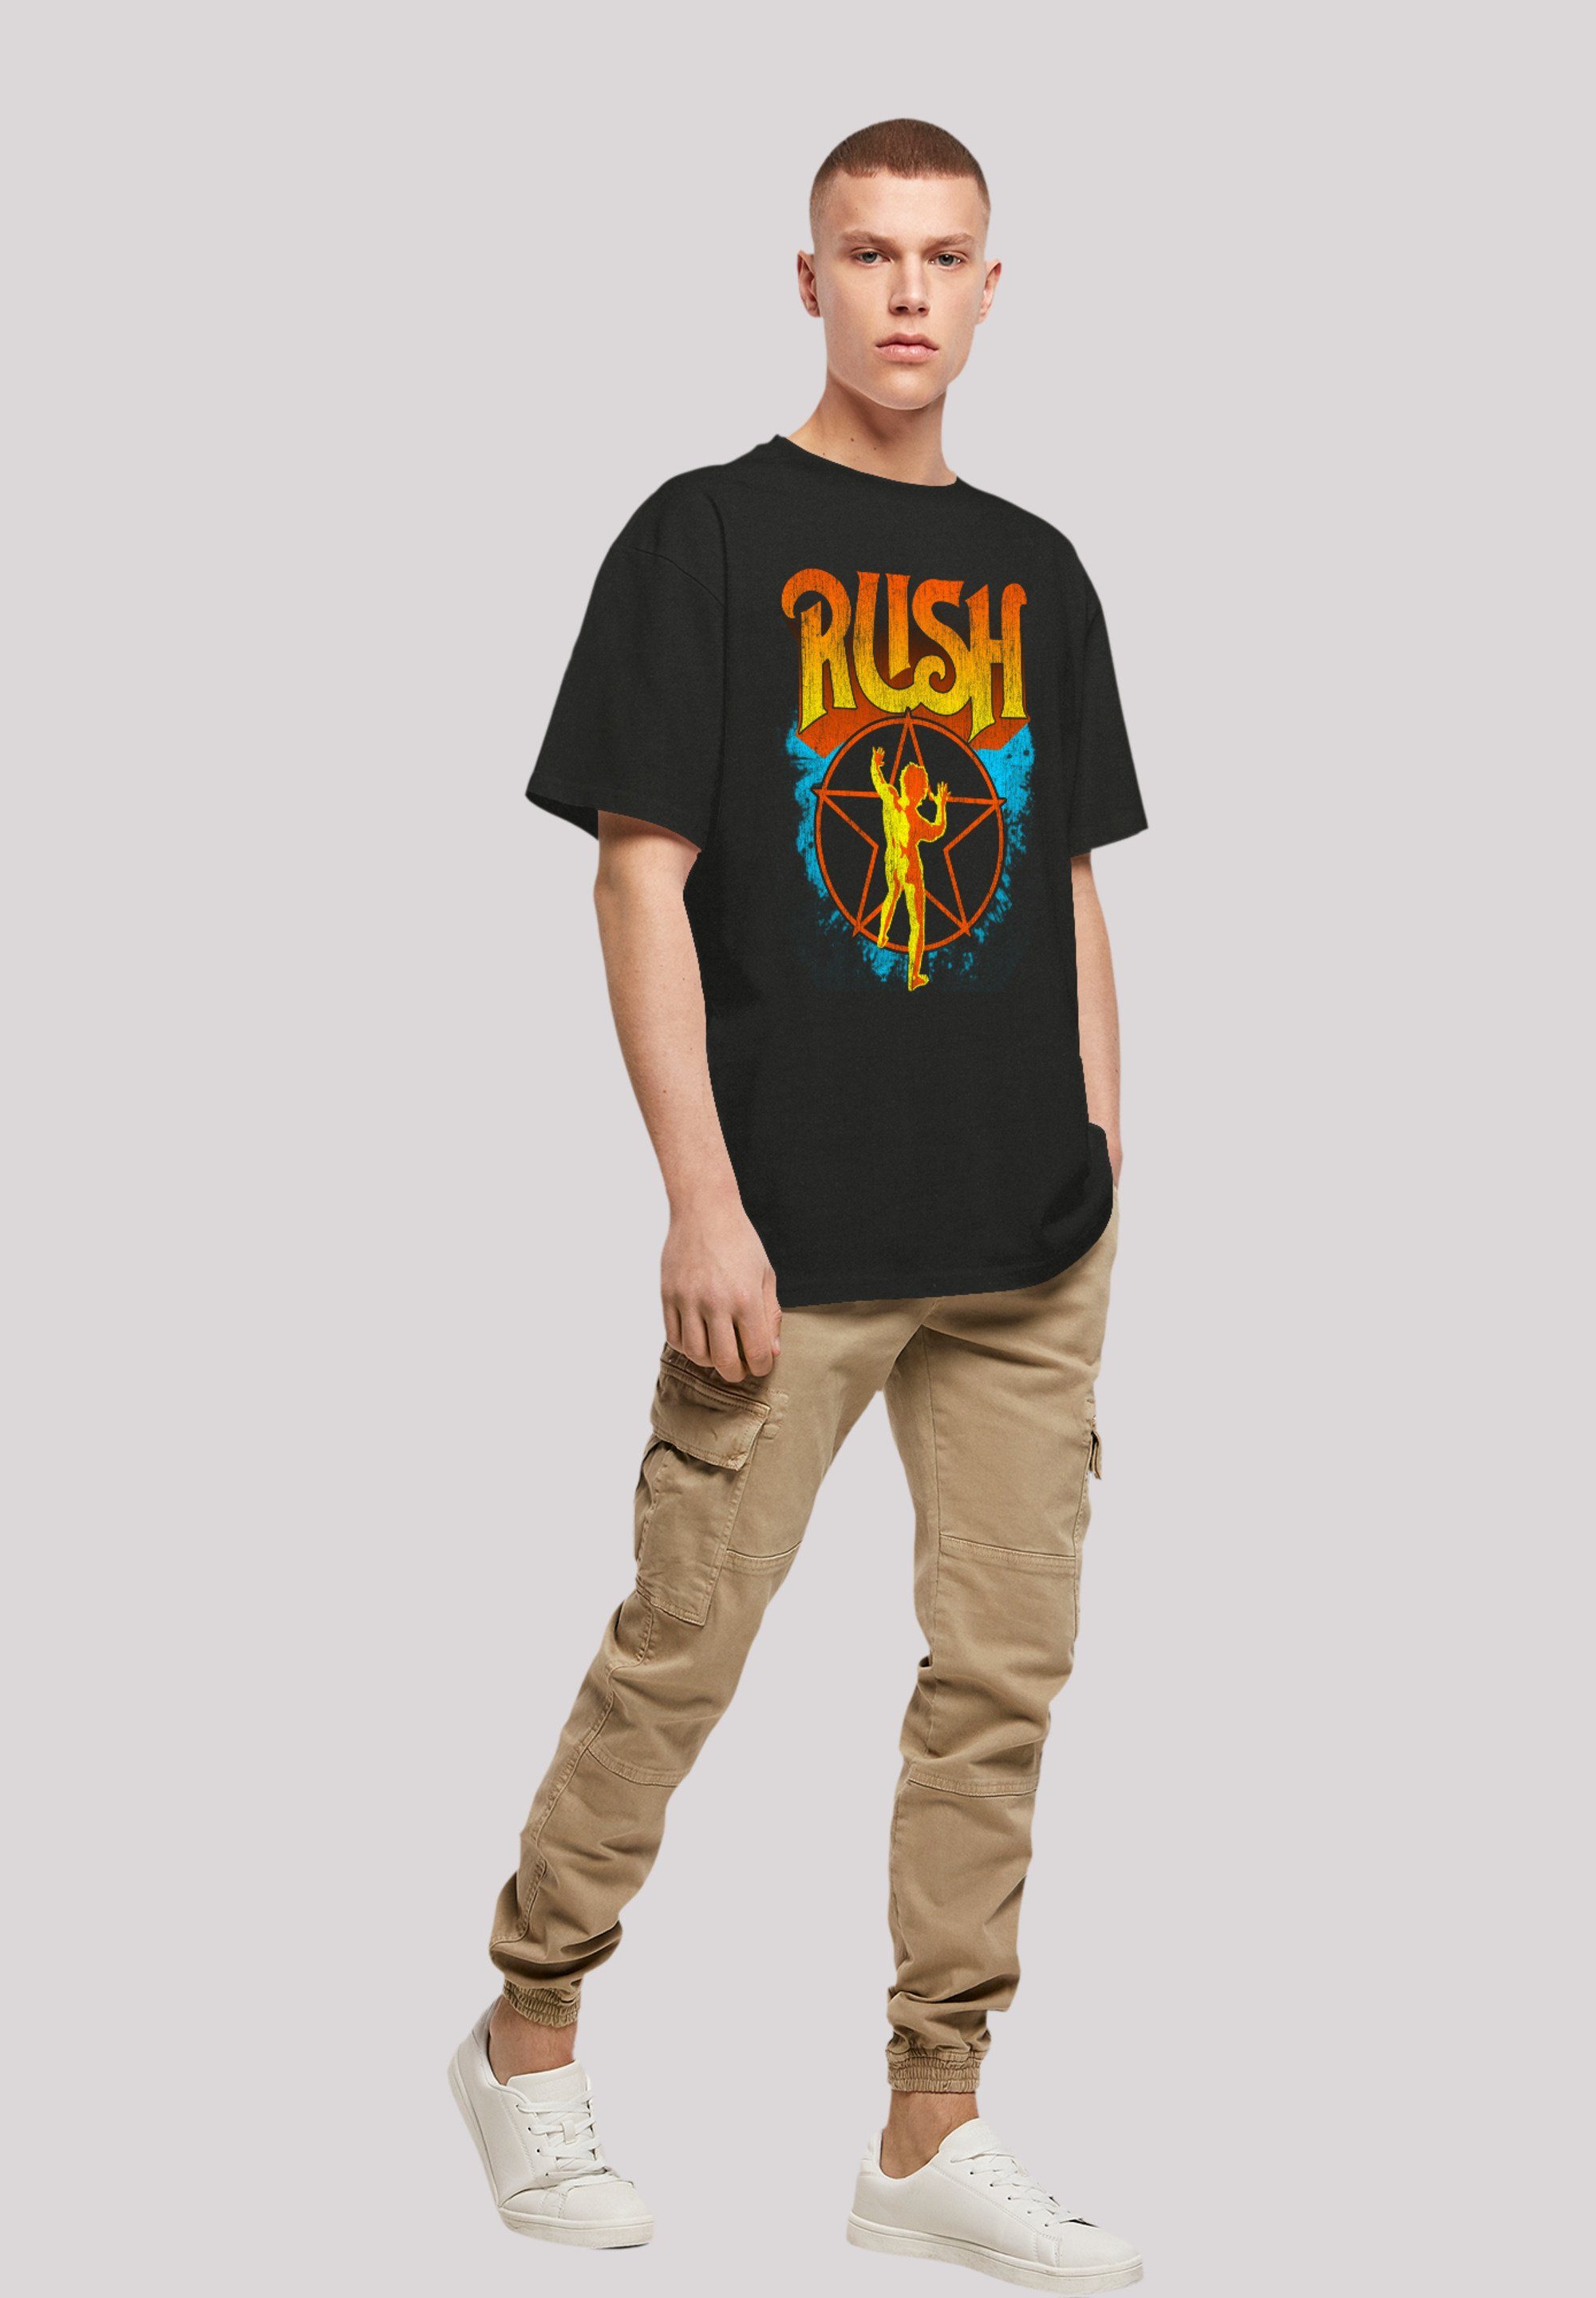 F4NT4STIC T-Shirt Rush Band schwarz Starman Rock Qualität Premium